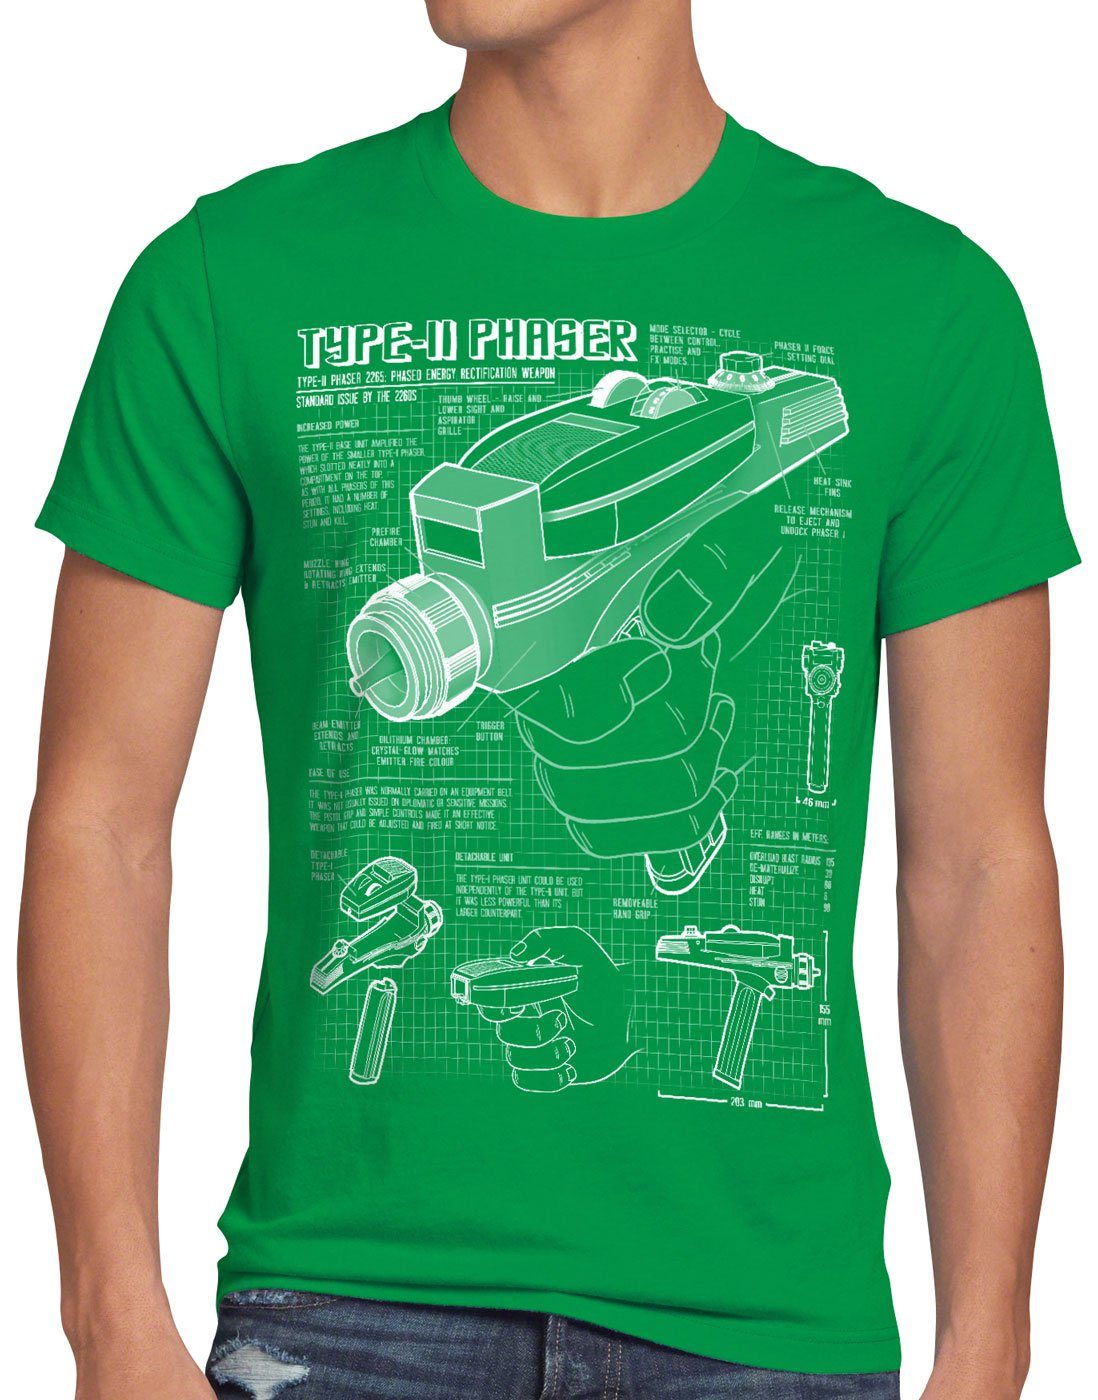 style3 Print-Shirt Herren T-Shirt Phaser 2265 Blaupause NCC-1701 trek trekkie star grün